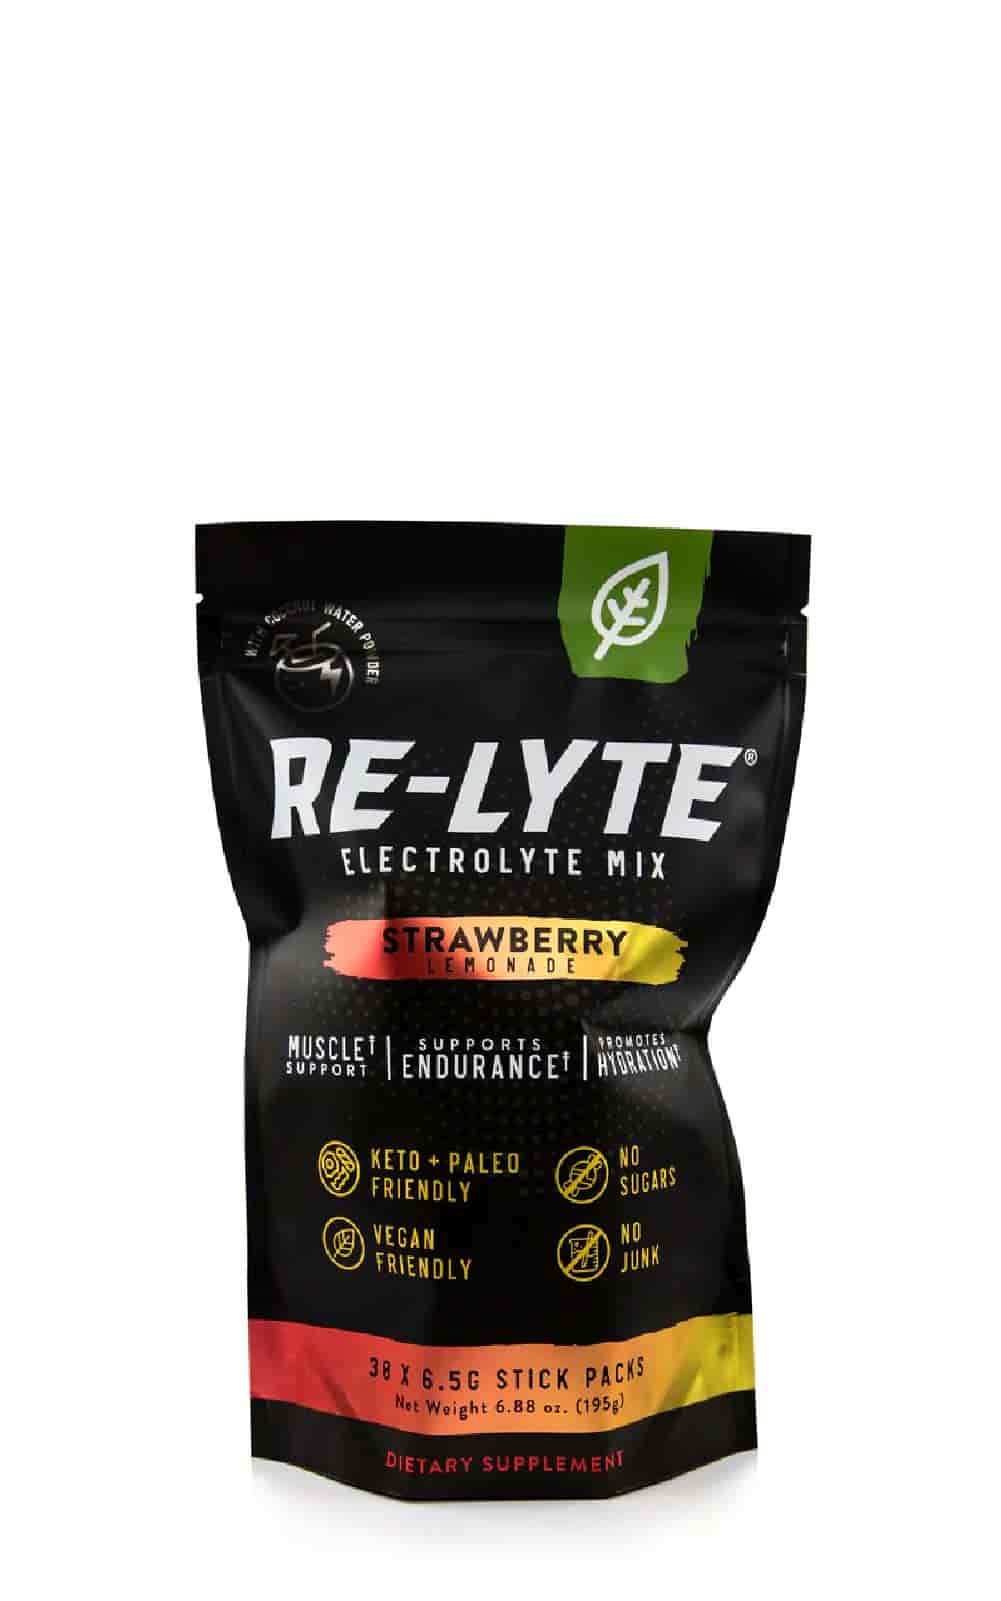 Re-Lyte Electrolyte Mix Stick Packs (30 ct.)